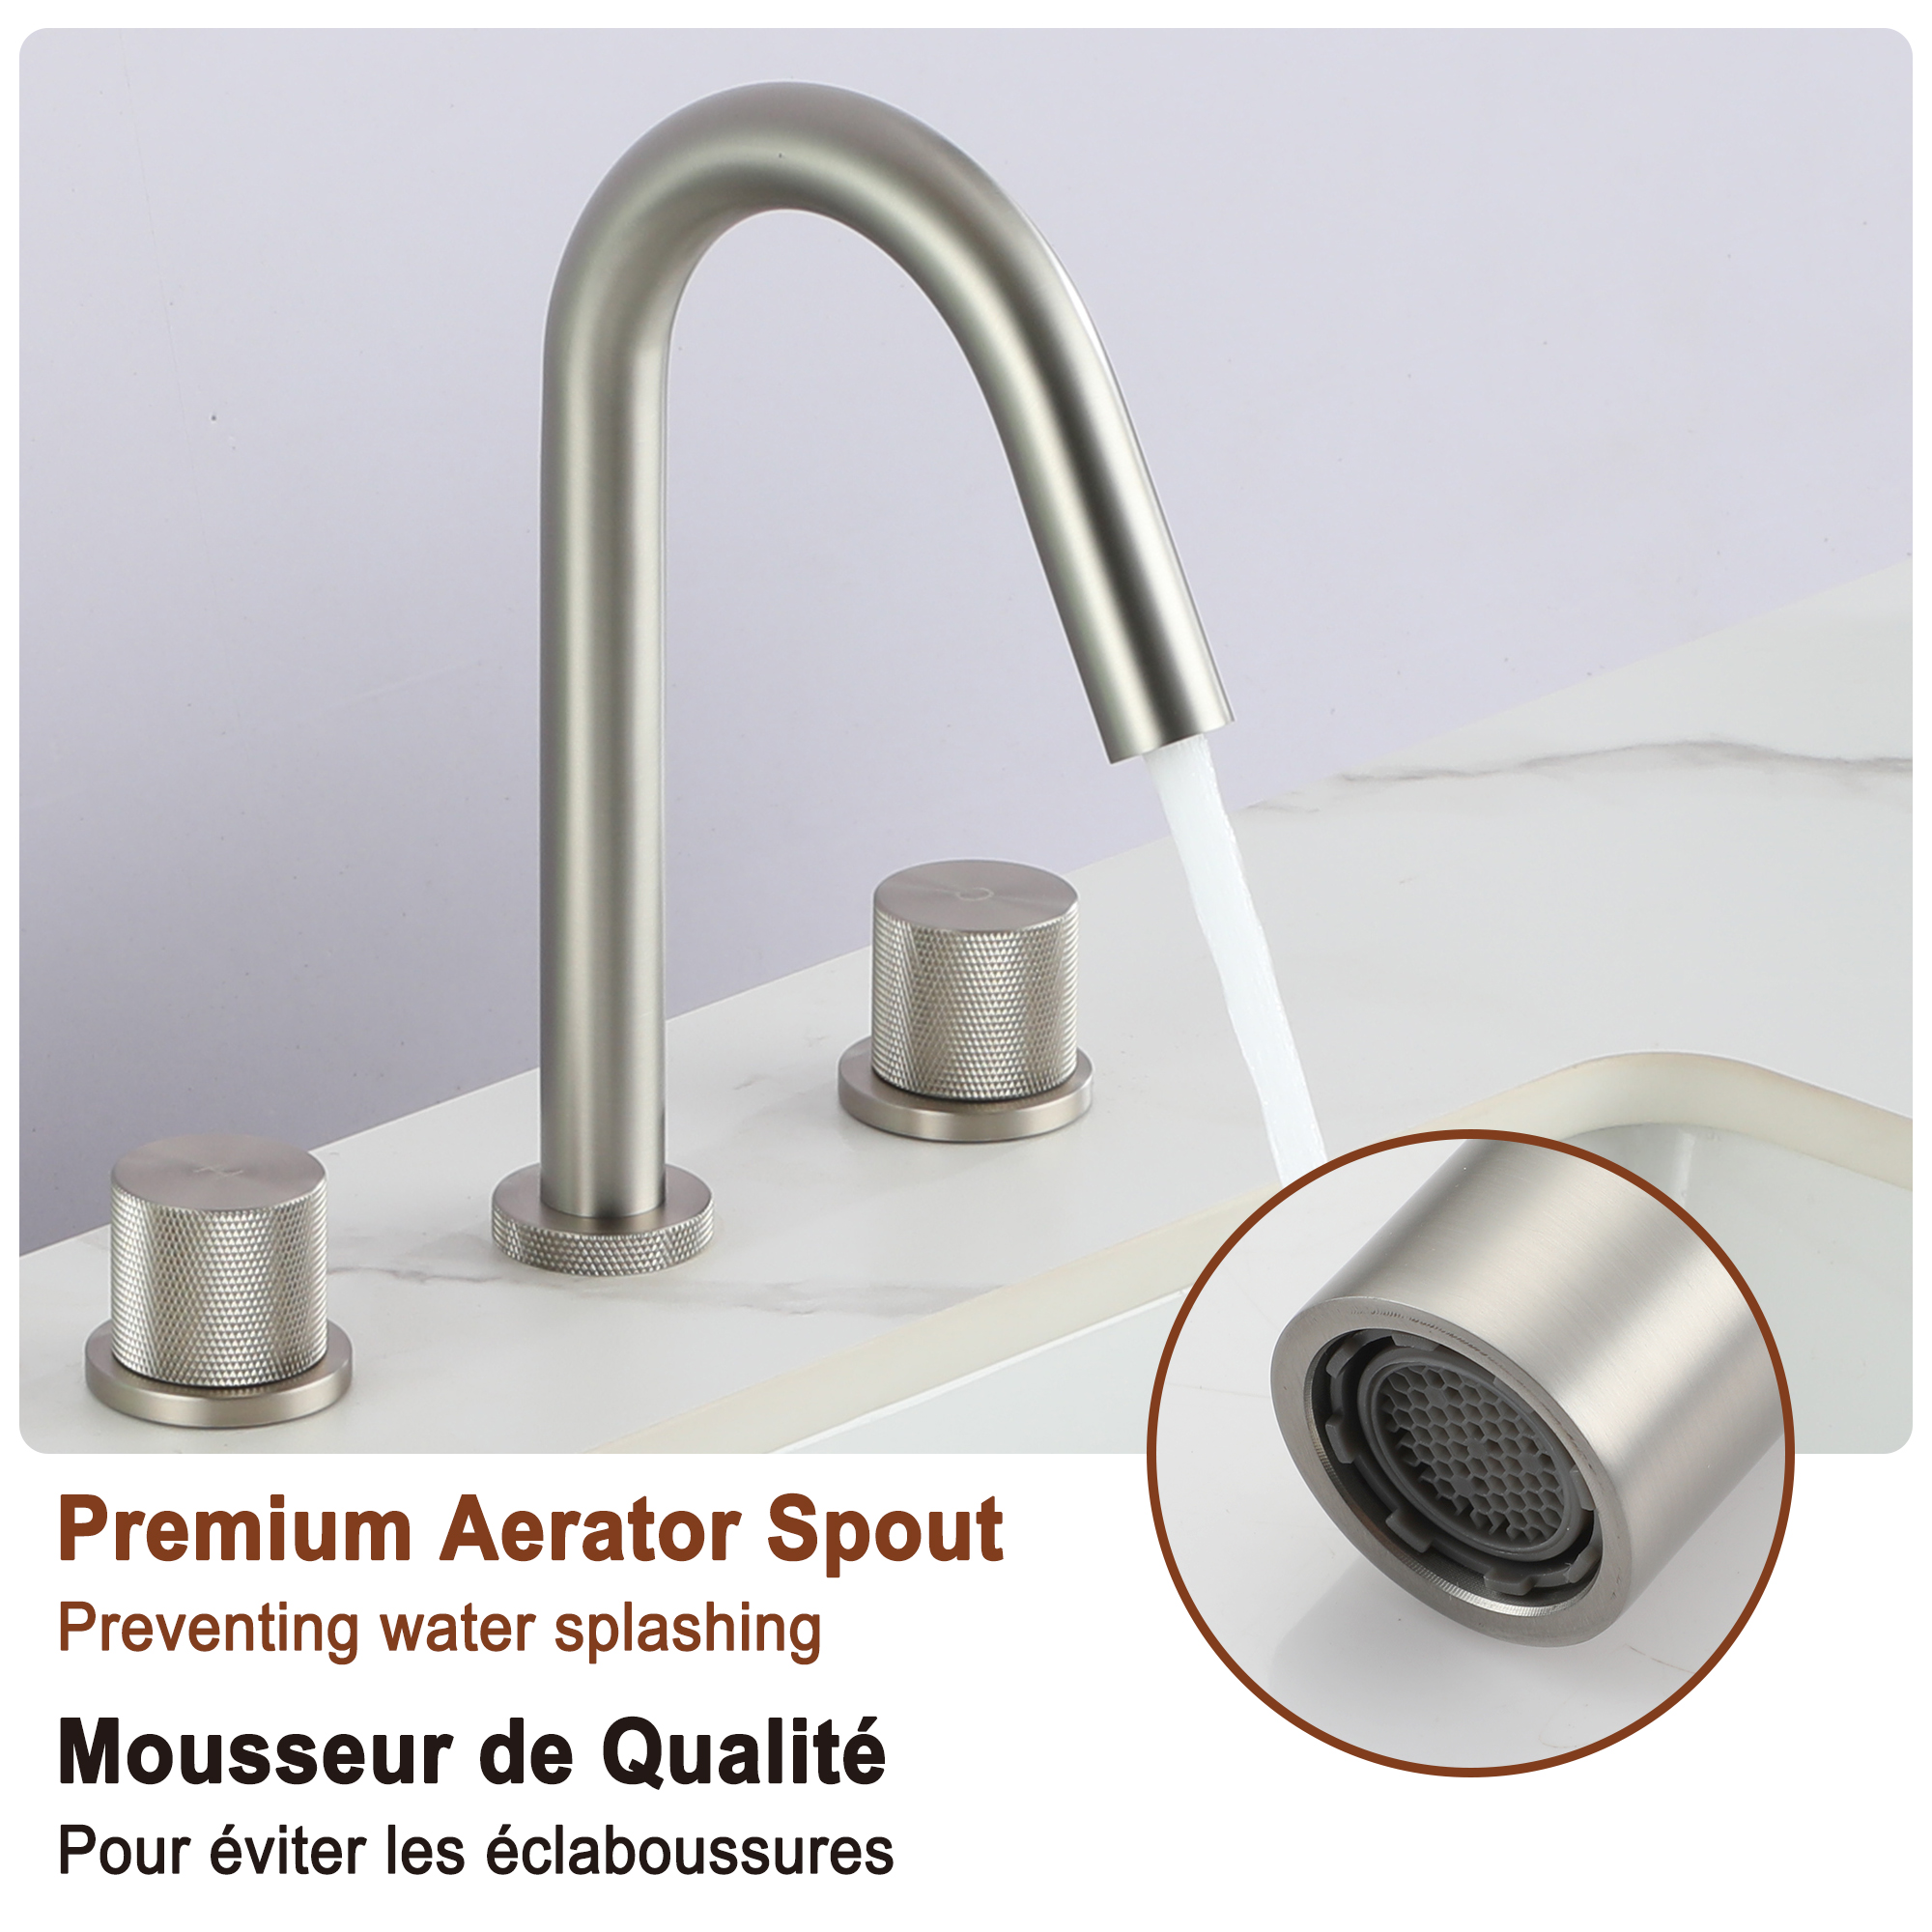 Mondawe 8 in. Widespread Double-Handle Bathroom Faucet in Nickel Brushed/Black/Brushed Gold-Mondawe